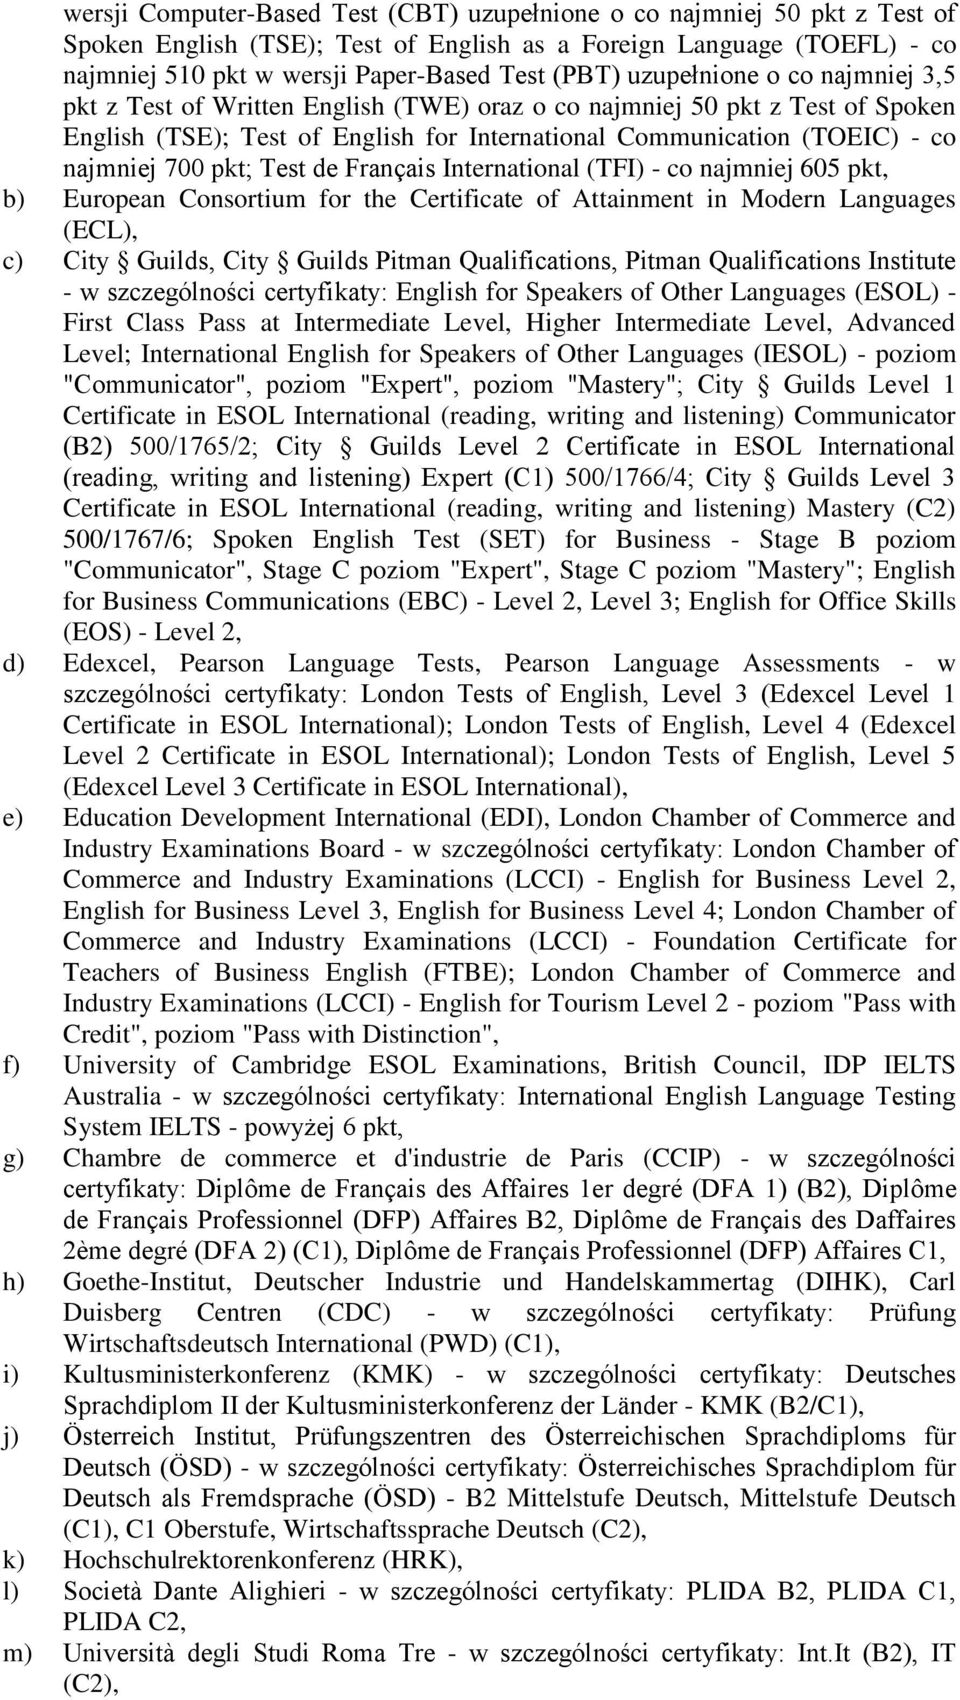 pkt; Test de Français International (TFI) - co najmniej 605 pkt, b) European Consortium for the Certificate of Attainment in Modern Languages (ECL), c) City Guilds, City Guilds Pitman Qualifications,